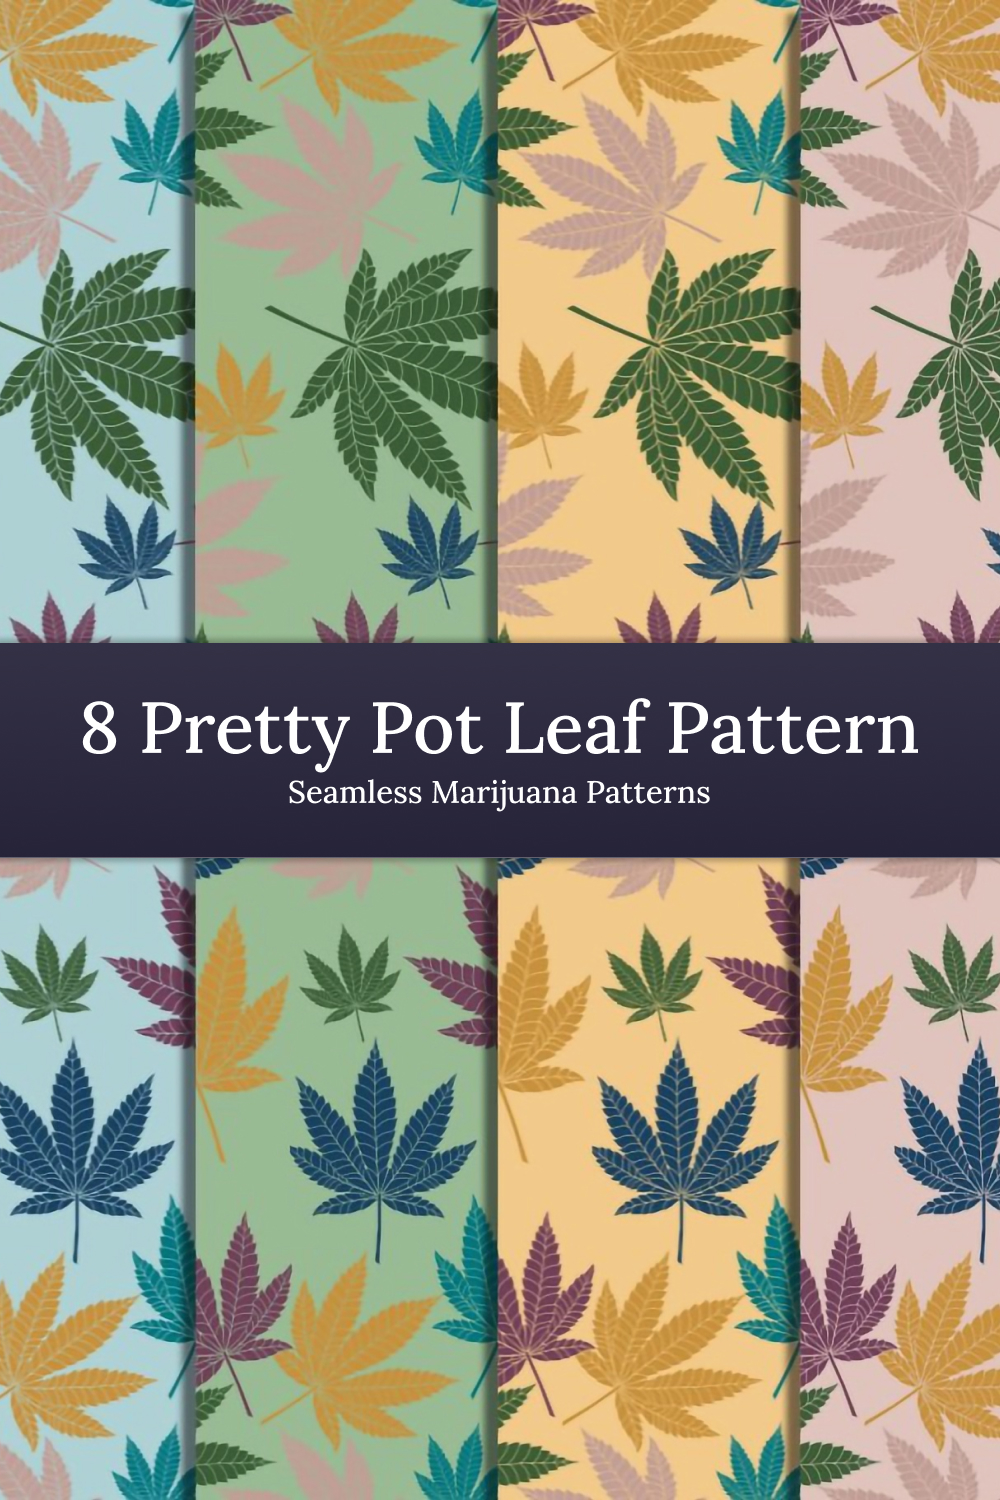 Seamless marijuana patterns - pinterest image preview.